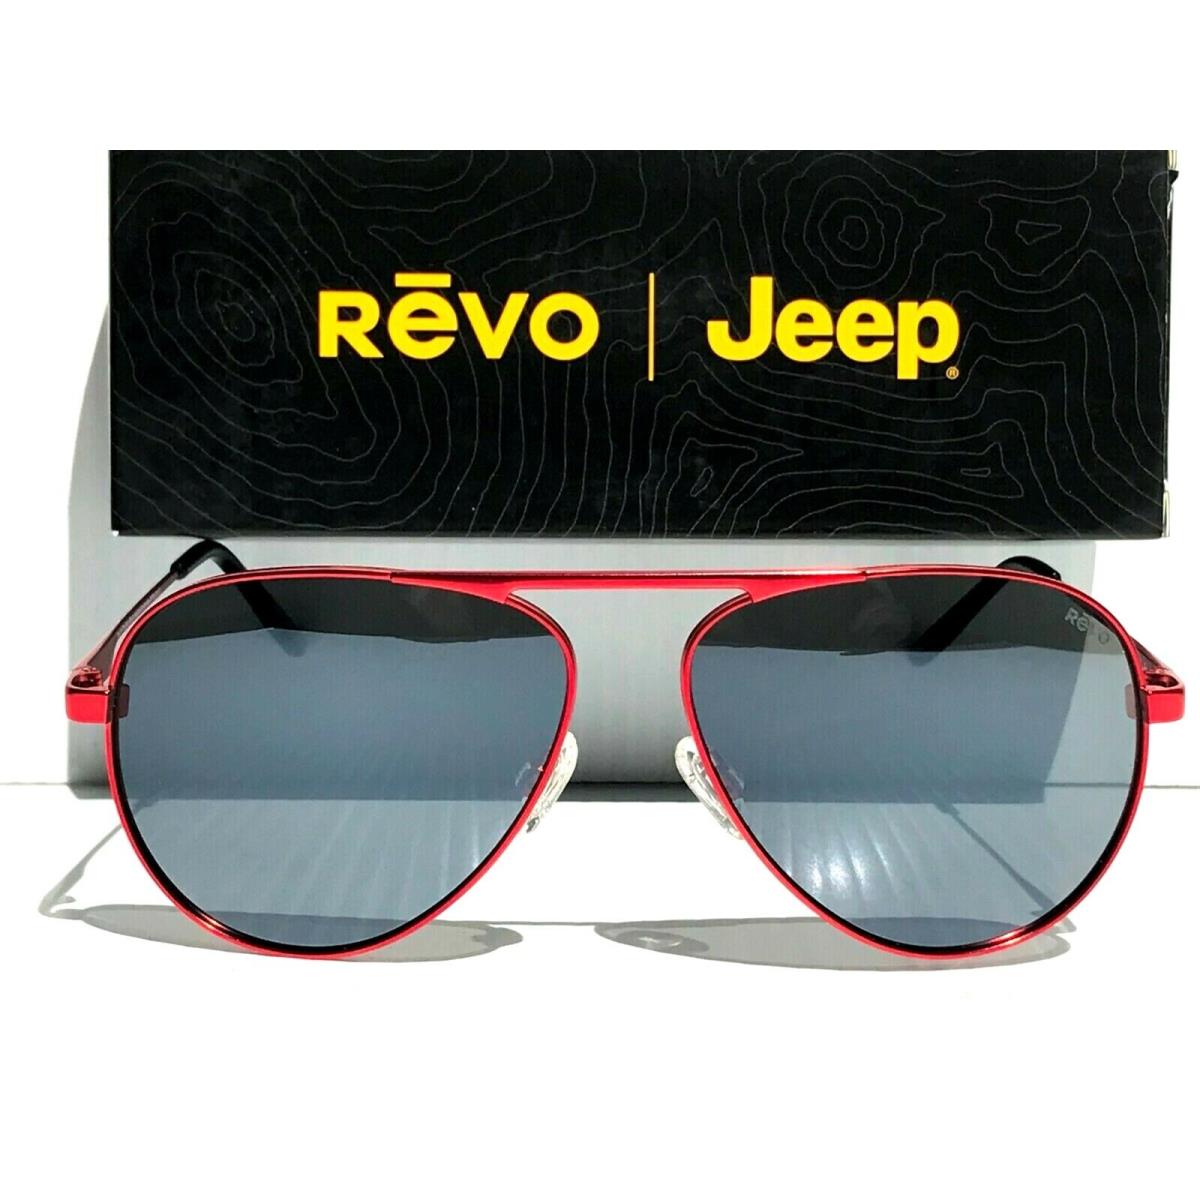 Jeep Revo Metro Firecracker Red 60mm Aviator Polarized Gray Sunglass 1163 06 GY